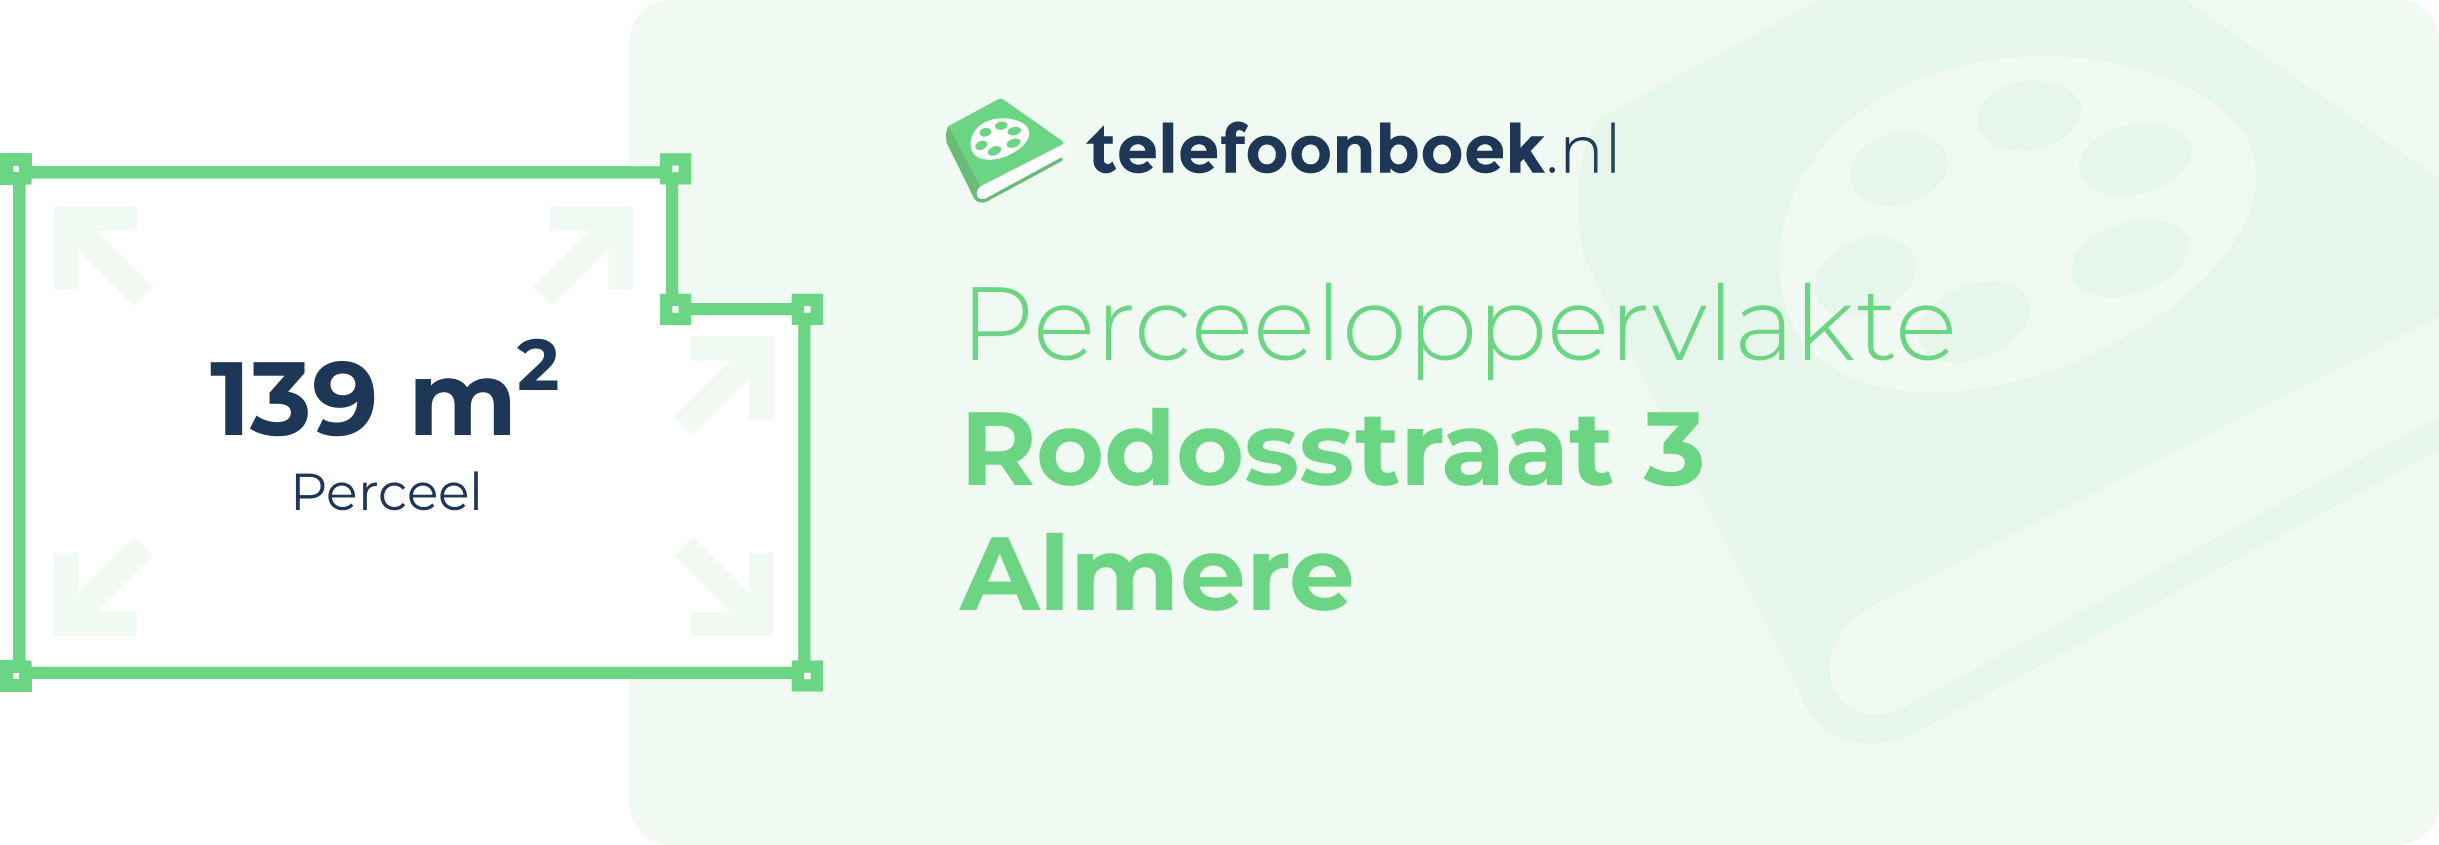 Perceeloppervlakte Rodosstraat 3 Almere